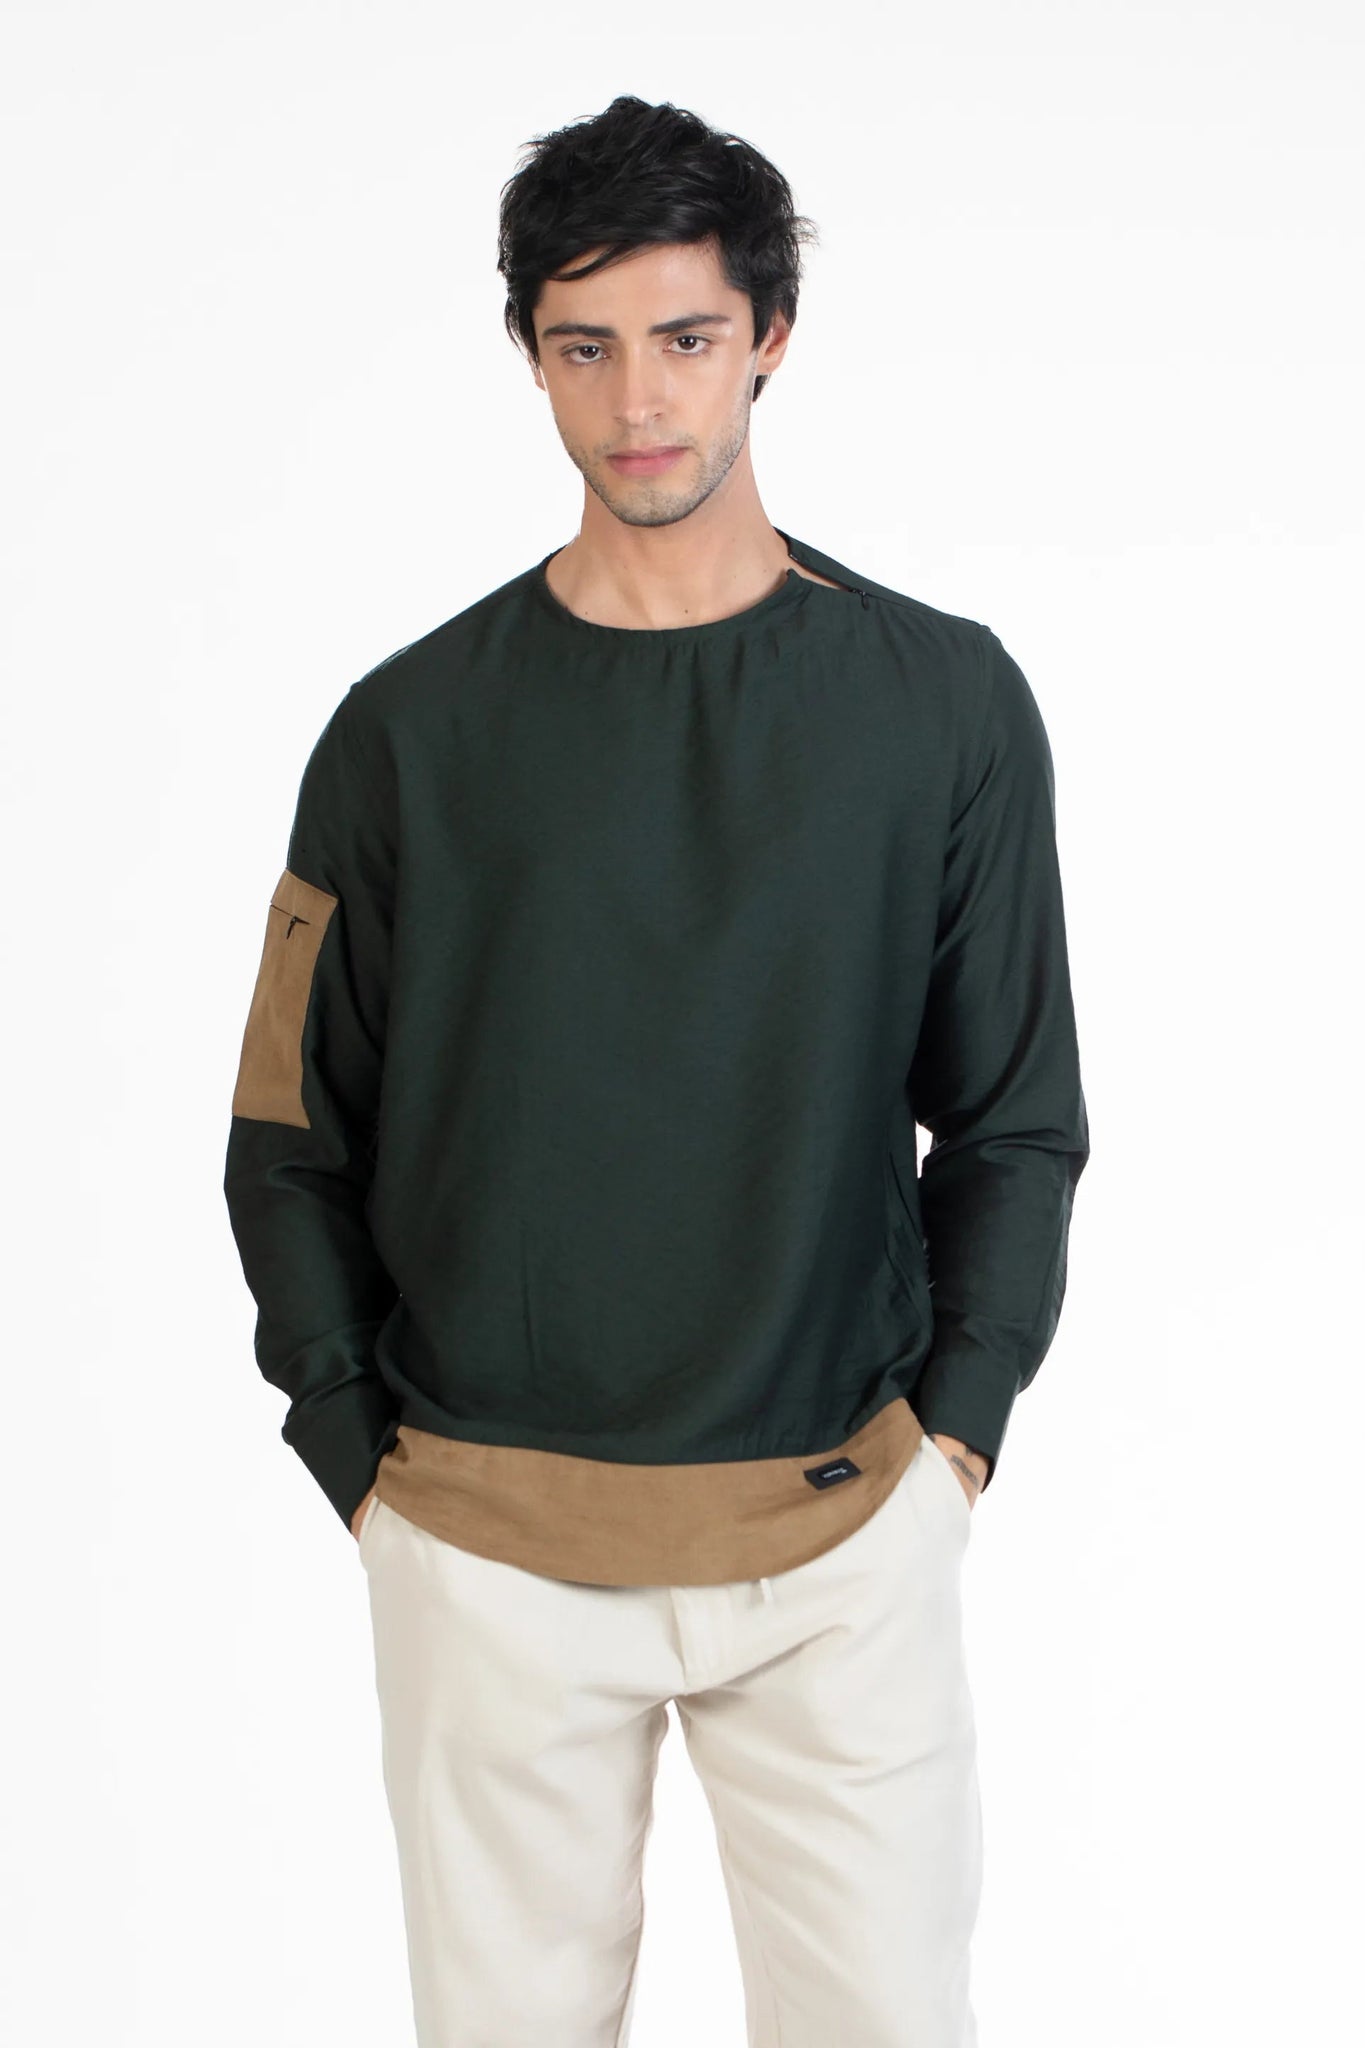 Buy Sleeve Pocket Crushed Shirt Online.